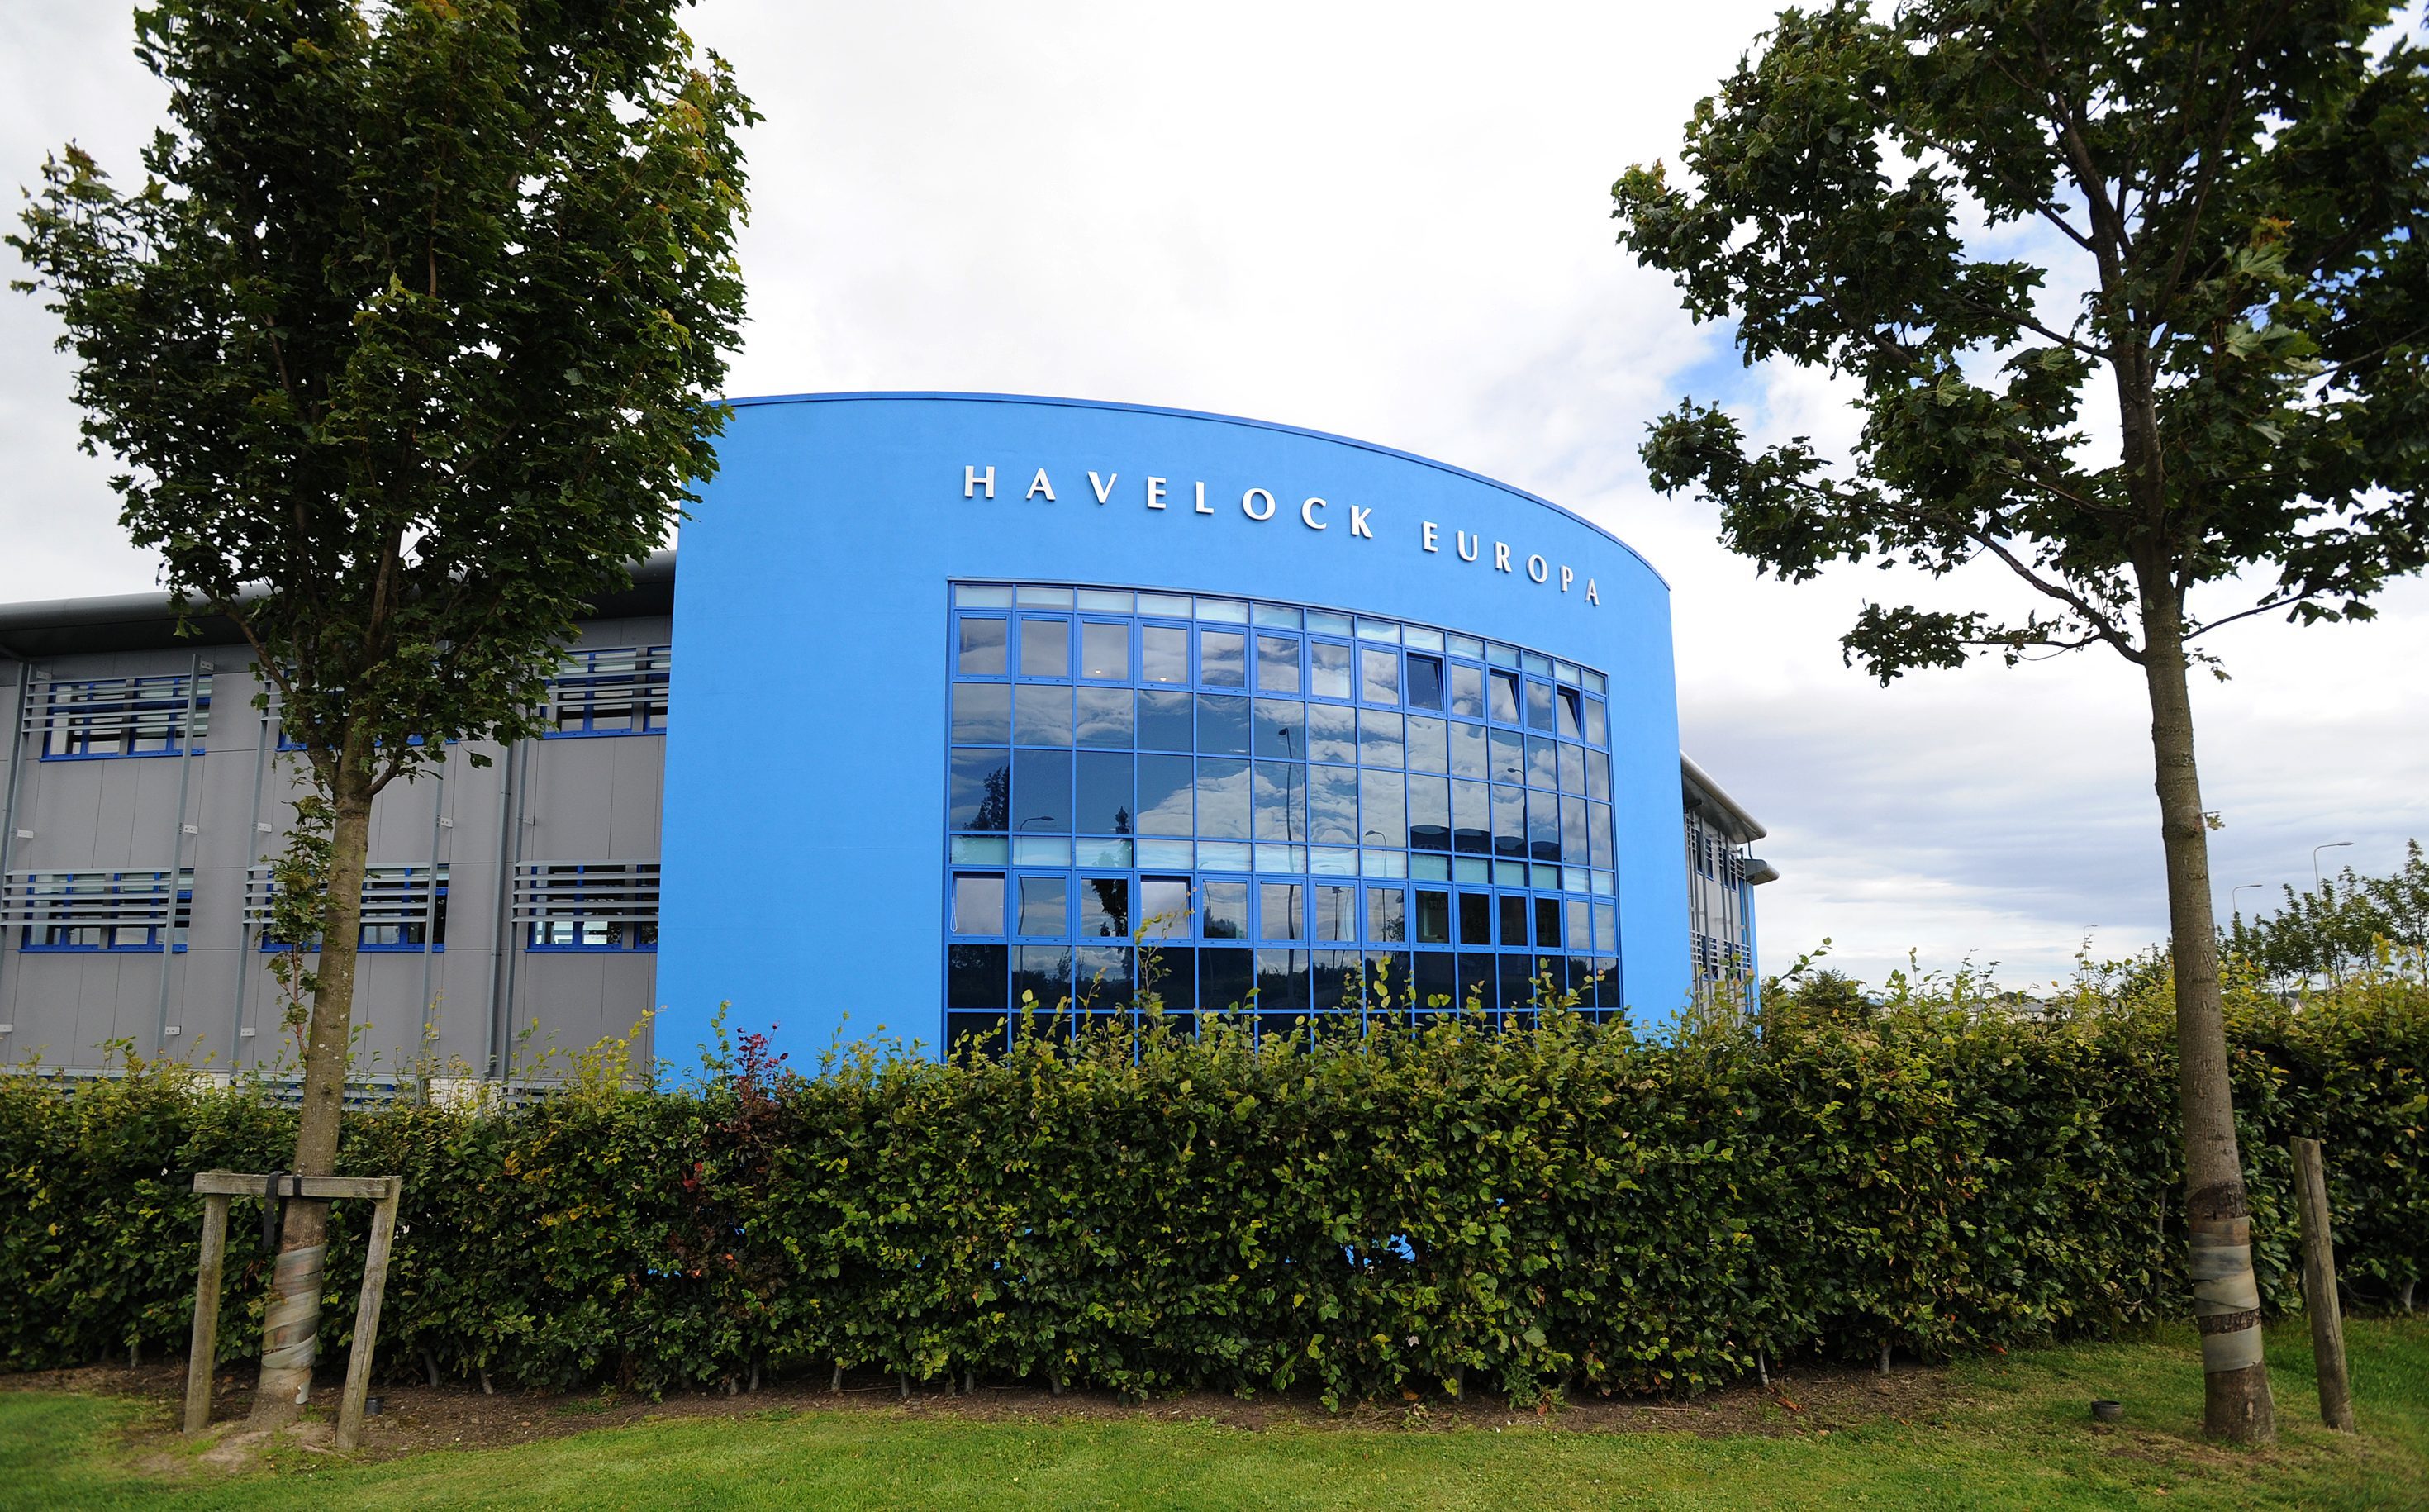 The Havelock Europa headquarters in John Smith Business Park, Kirkcaldy.